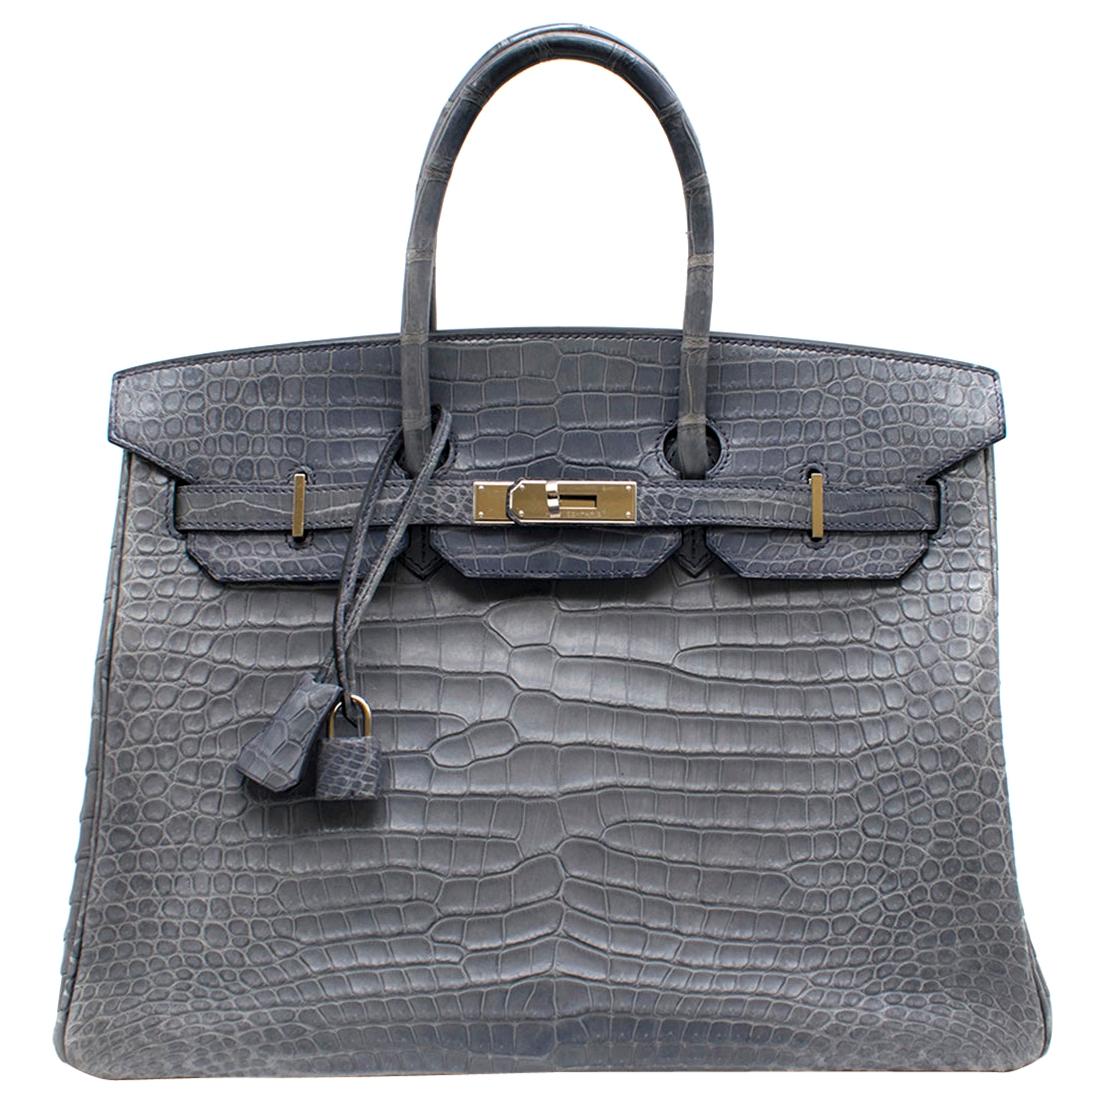 Hermes Petrol Alligator Leather 35cm Birkin Bag